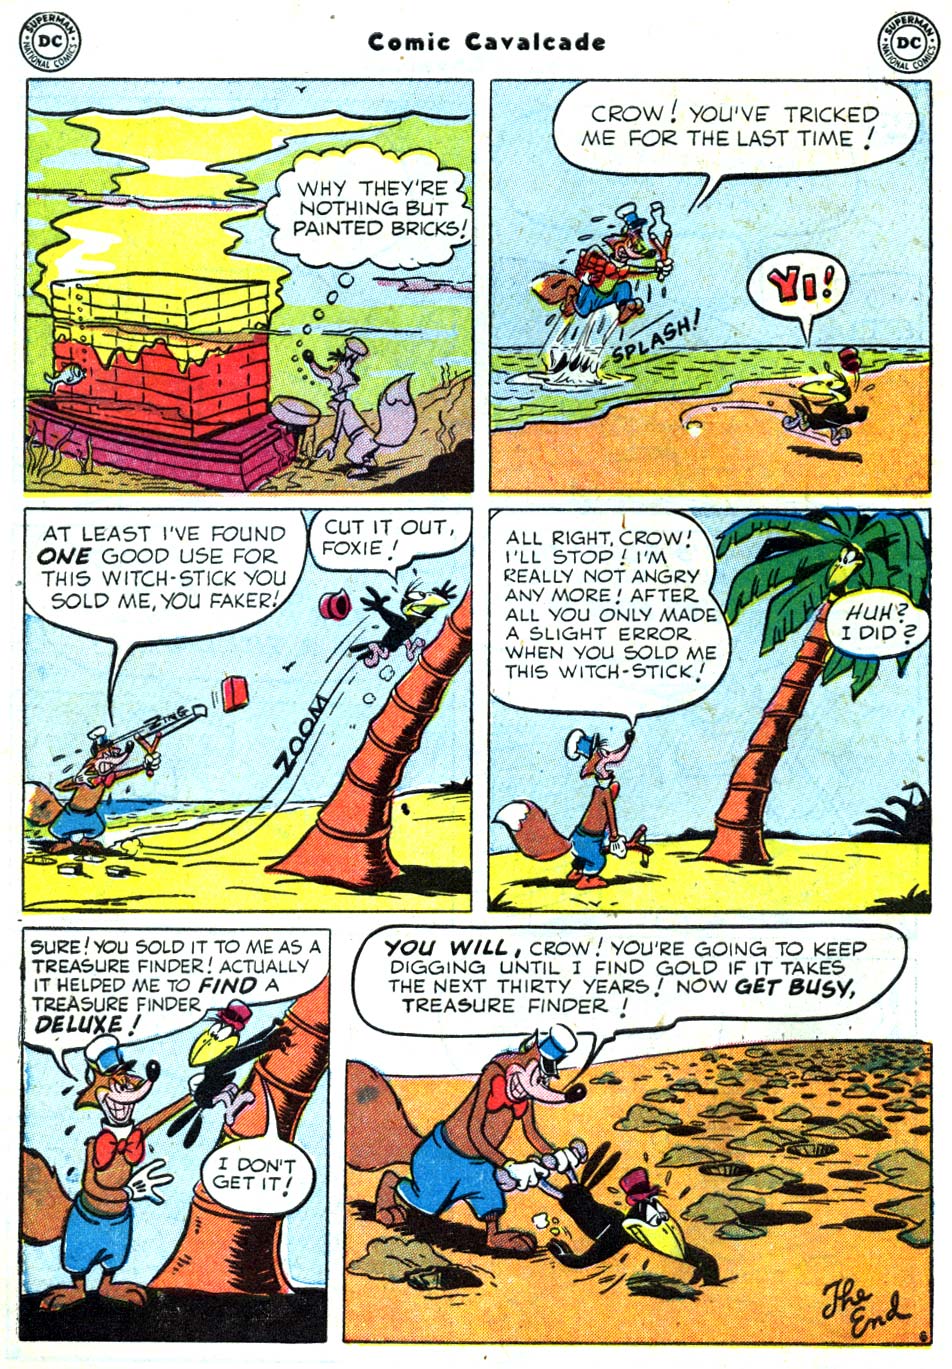 Comic Cavalcade issue 46 - Page 8